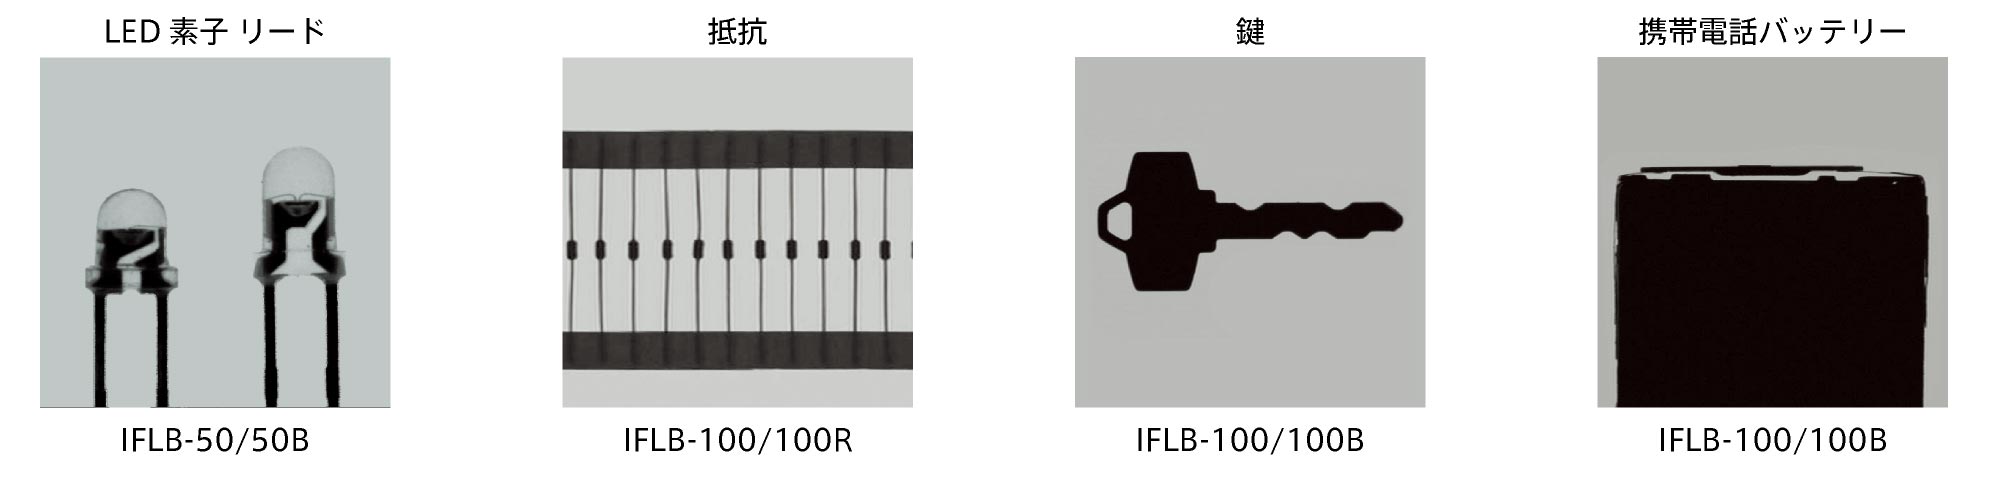 IFLB Product Description 04